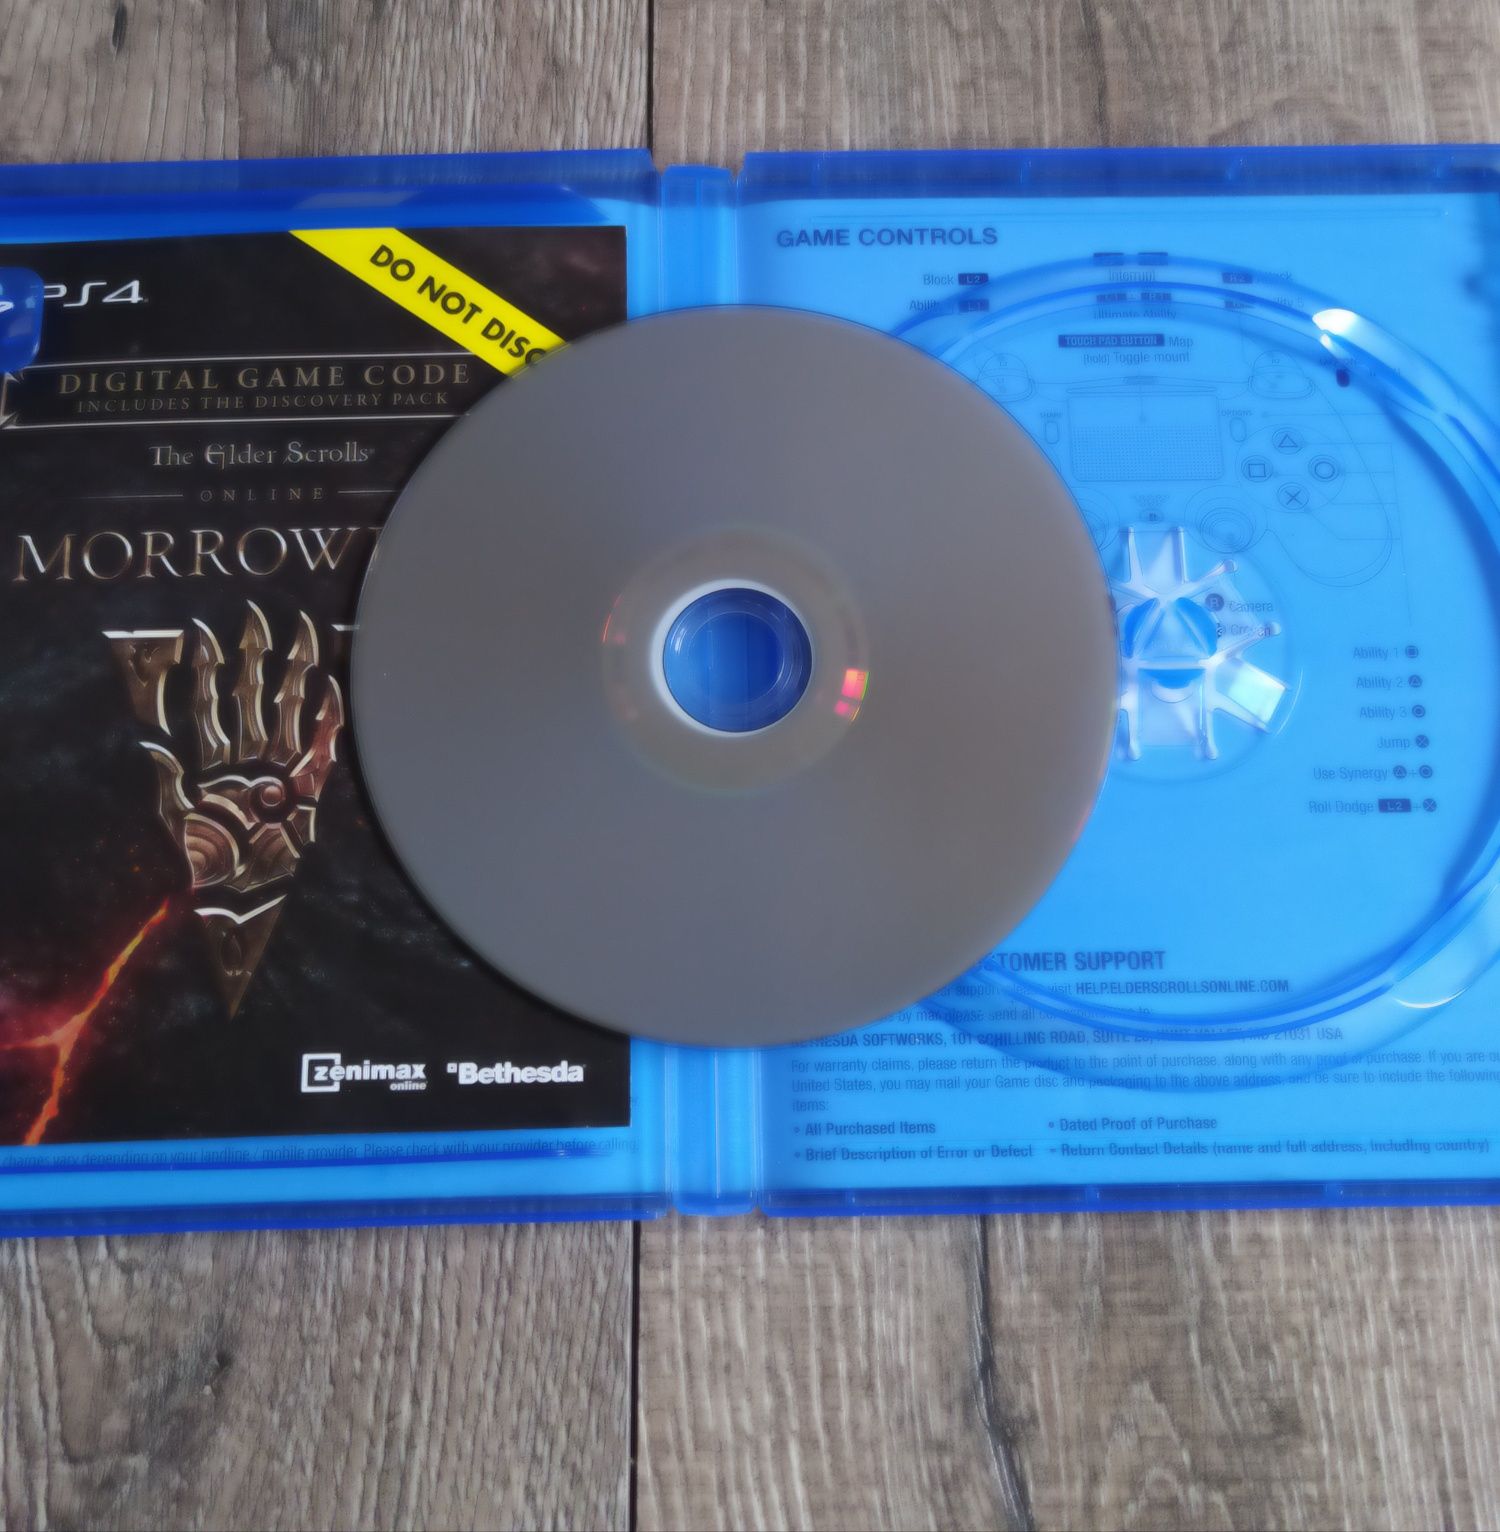 Gra PS4 The Elder Scrolls Morrowind Wysyla